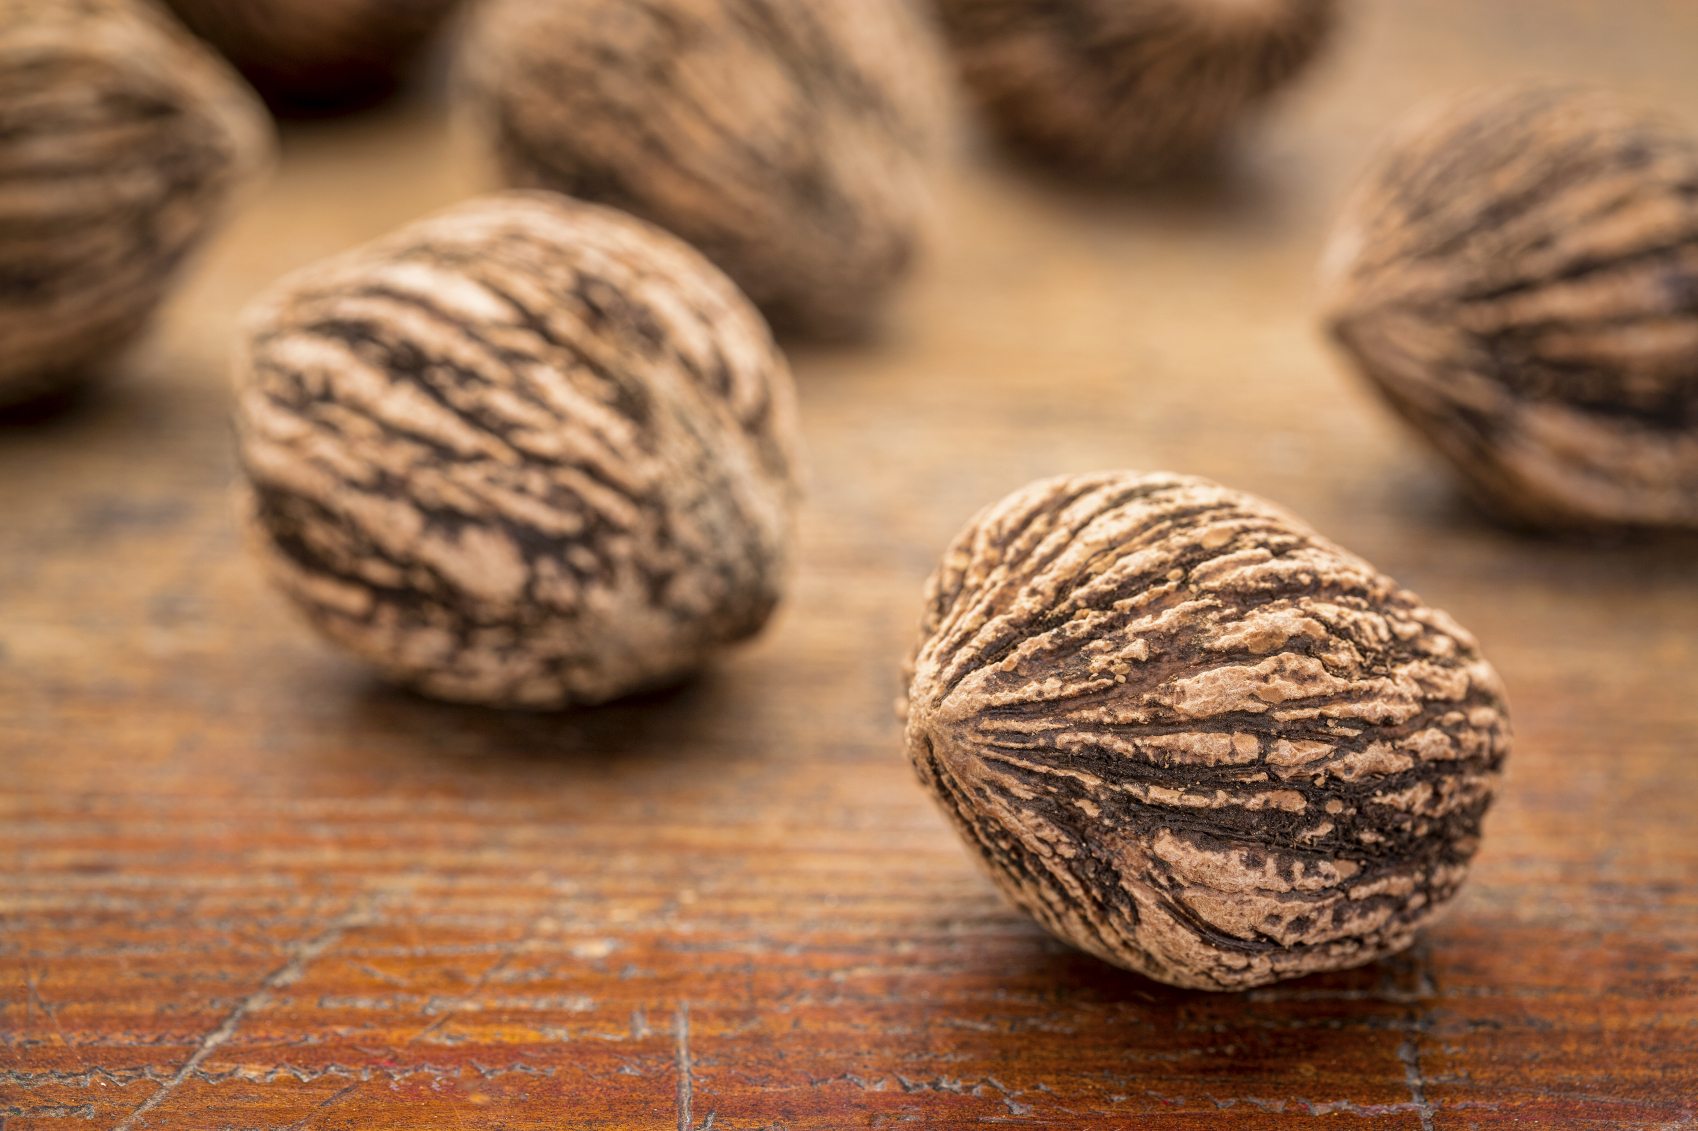 Health benefits of black walnuts